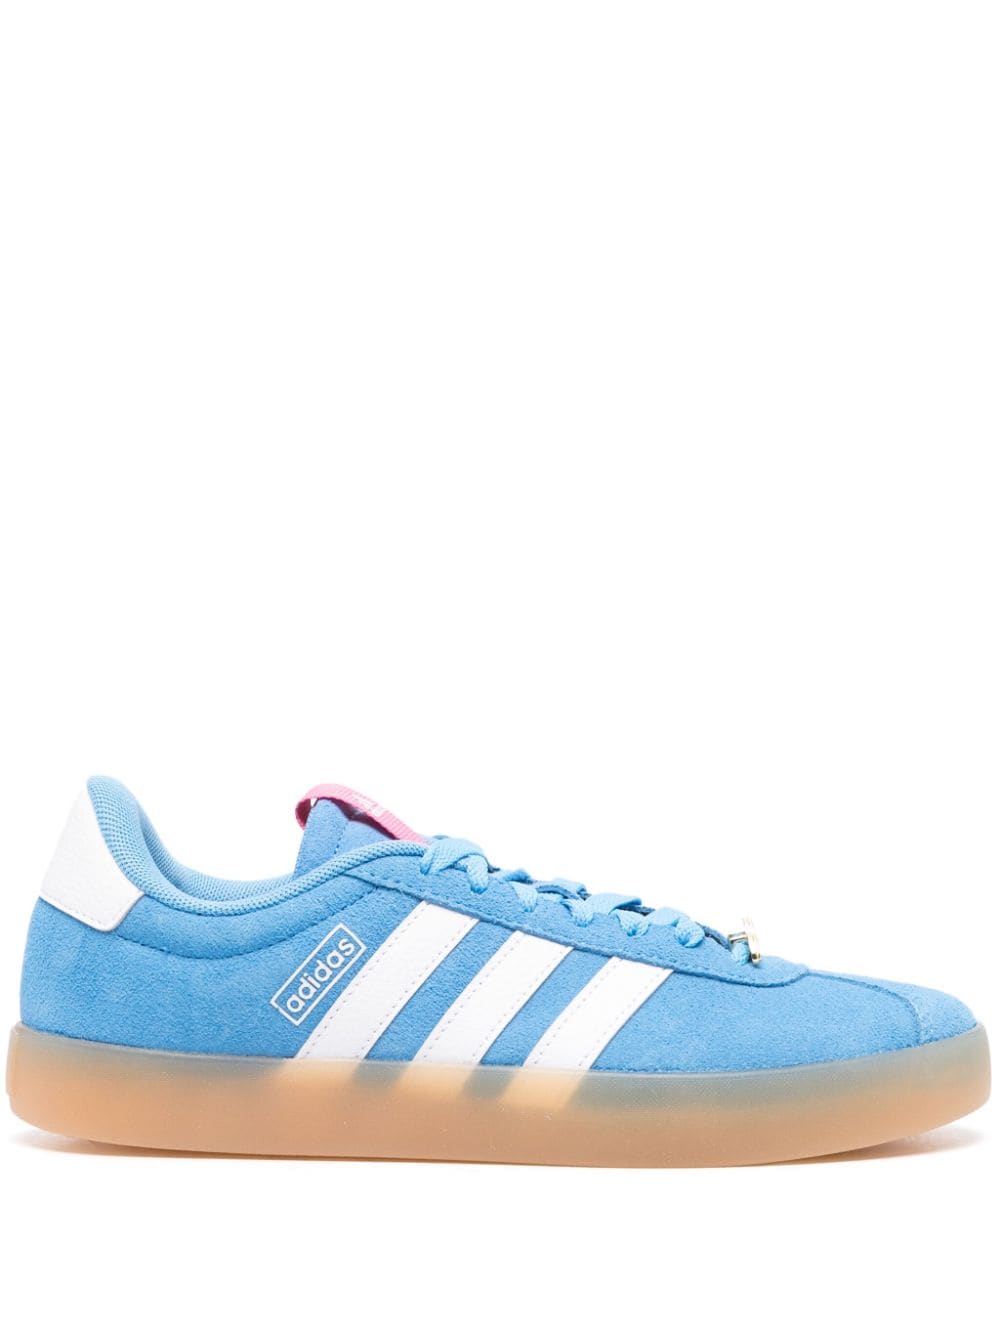 Adidas Originals Vl Court 3.0 Suede Sneakers In Blue